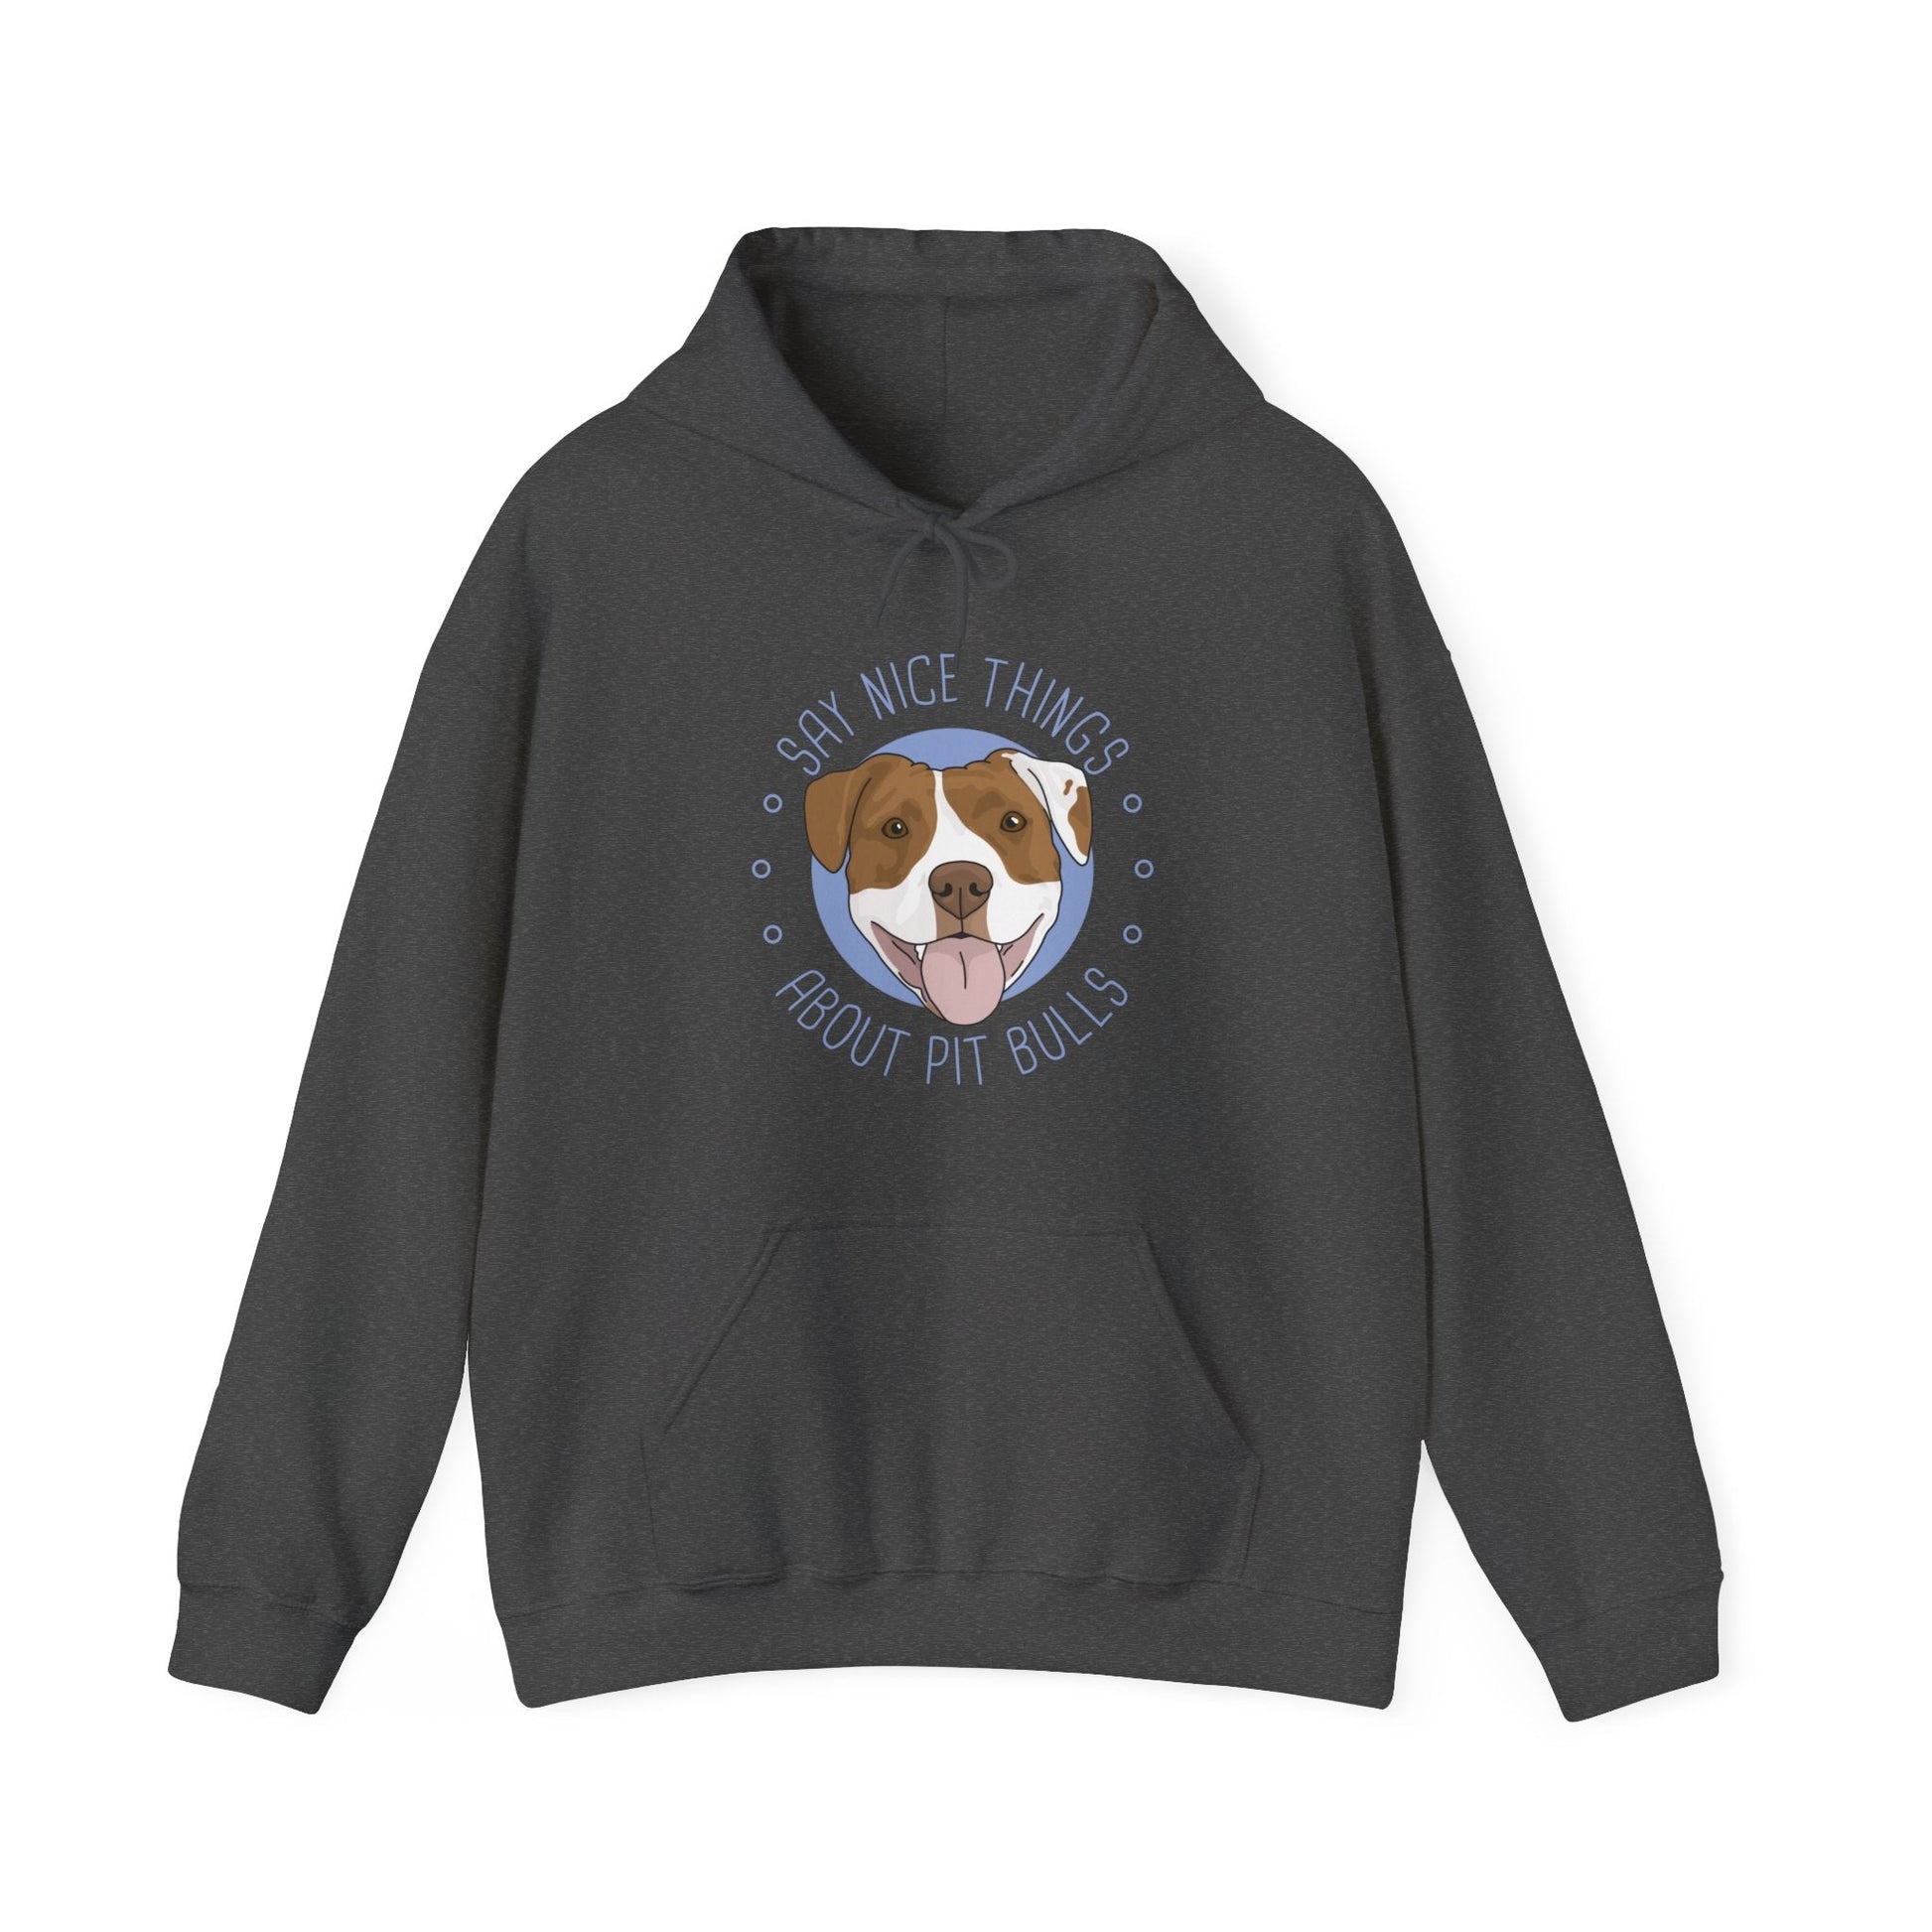 Say Nice Things About Pit Bulls | Hooded Sweatshirt - Detezi Designs-32296220650653440899